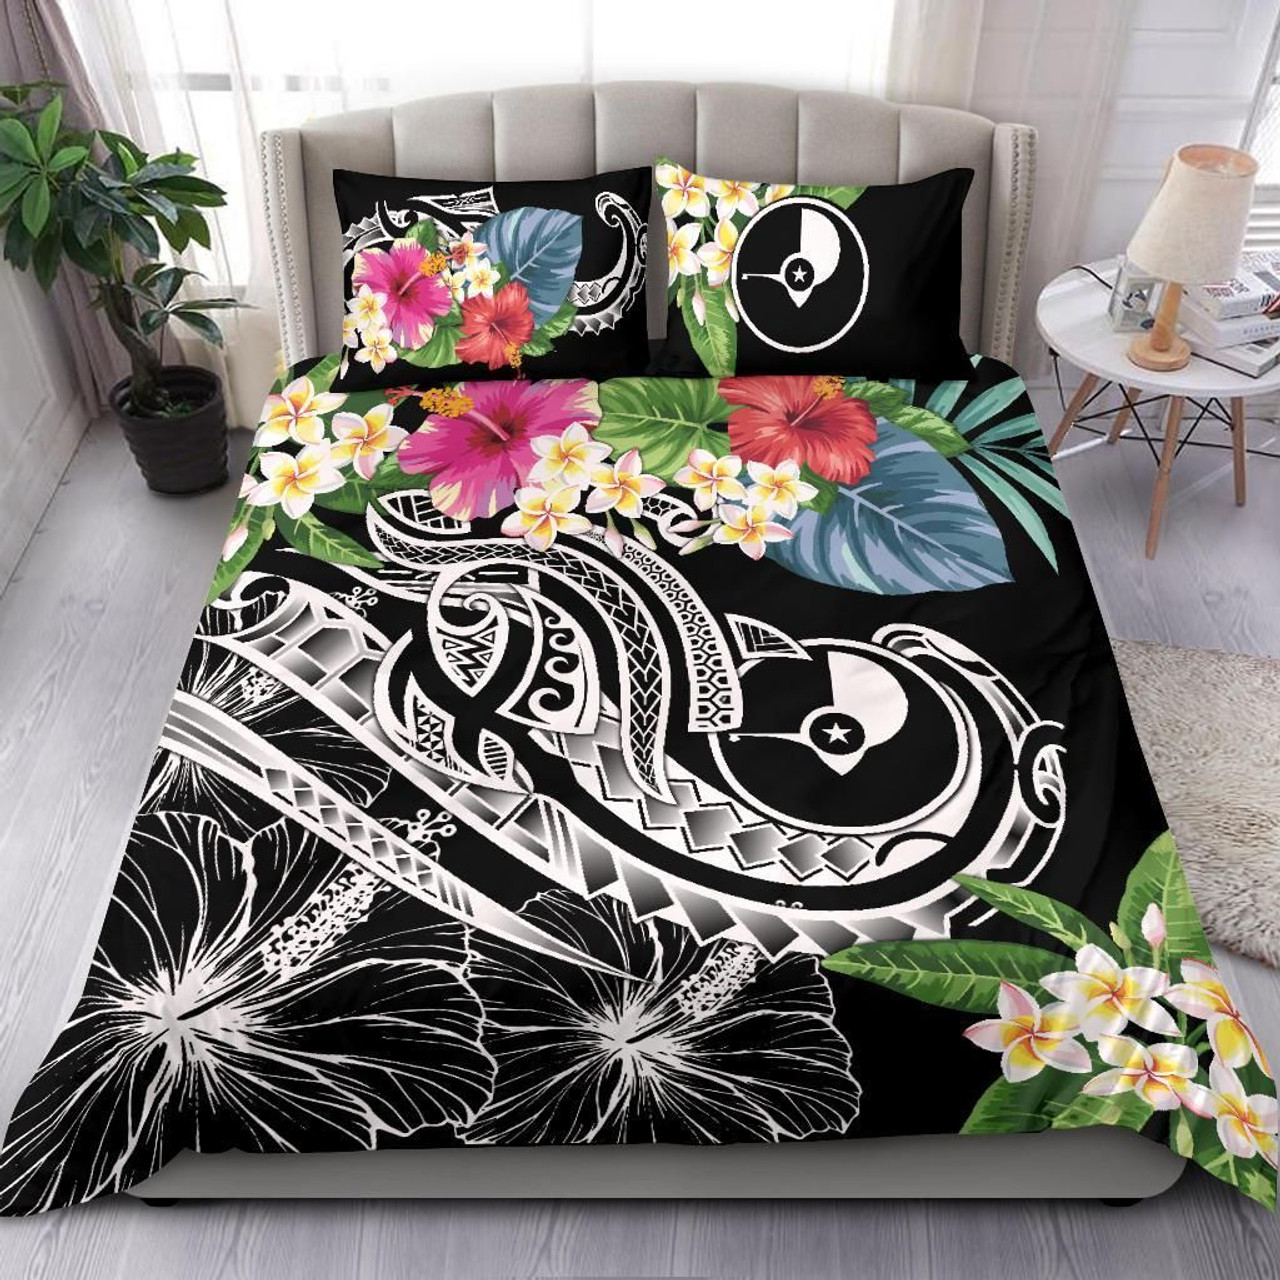 Yap Polynesian Bedding Set - Summer Plumeria (Black) 1